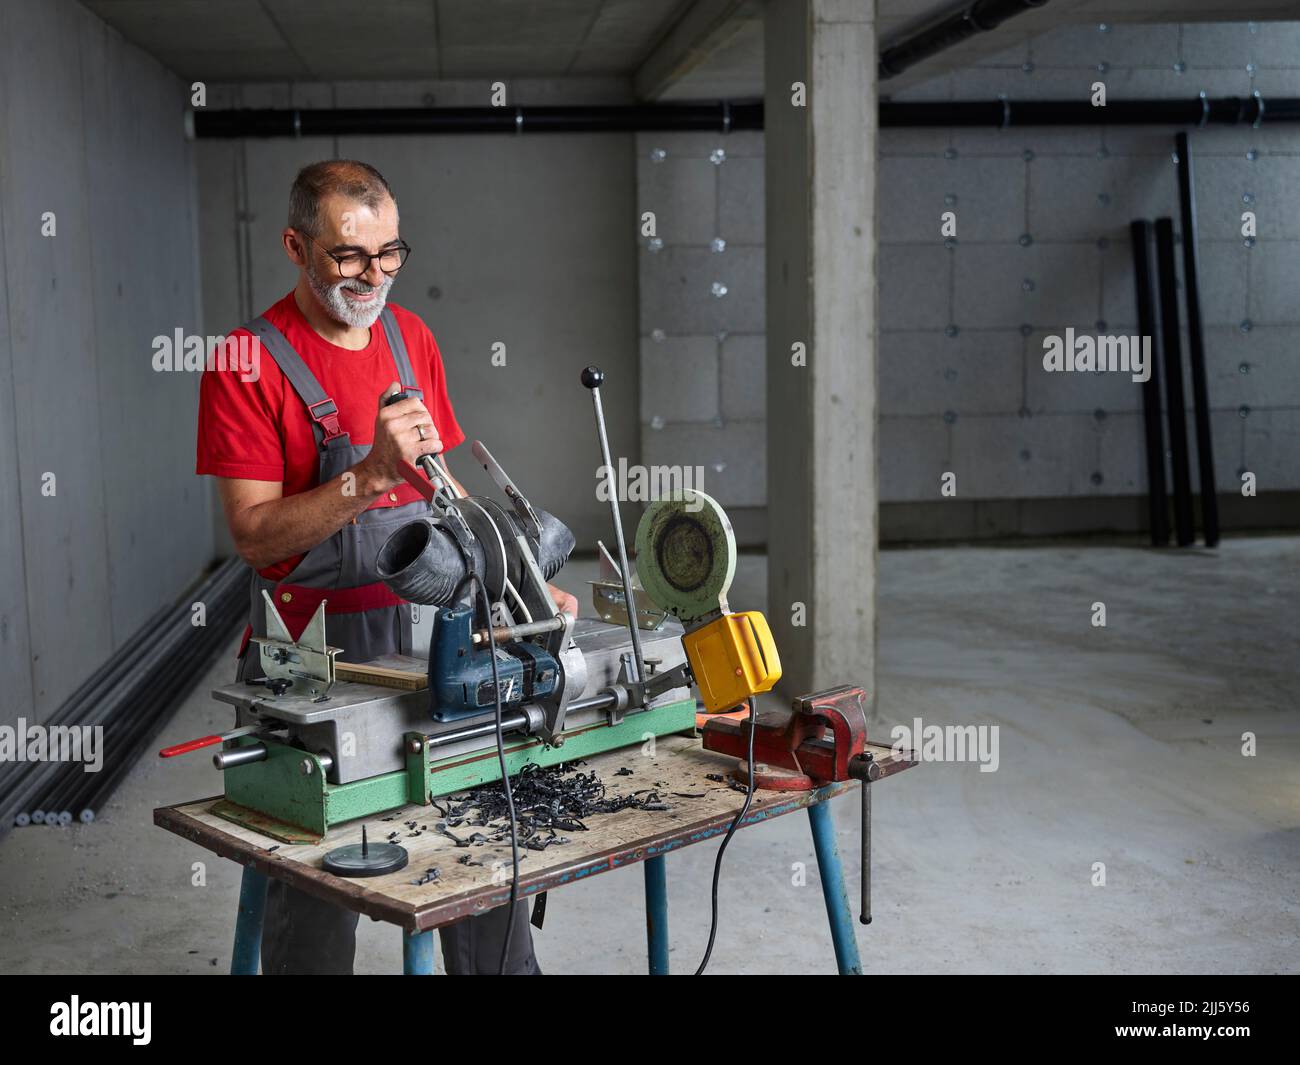 Smiling plumber wearing eyeglasses cutting plastic pipe at workbench Stock Photo